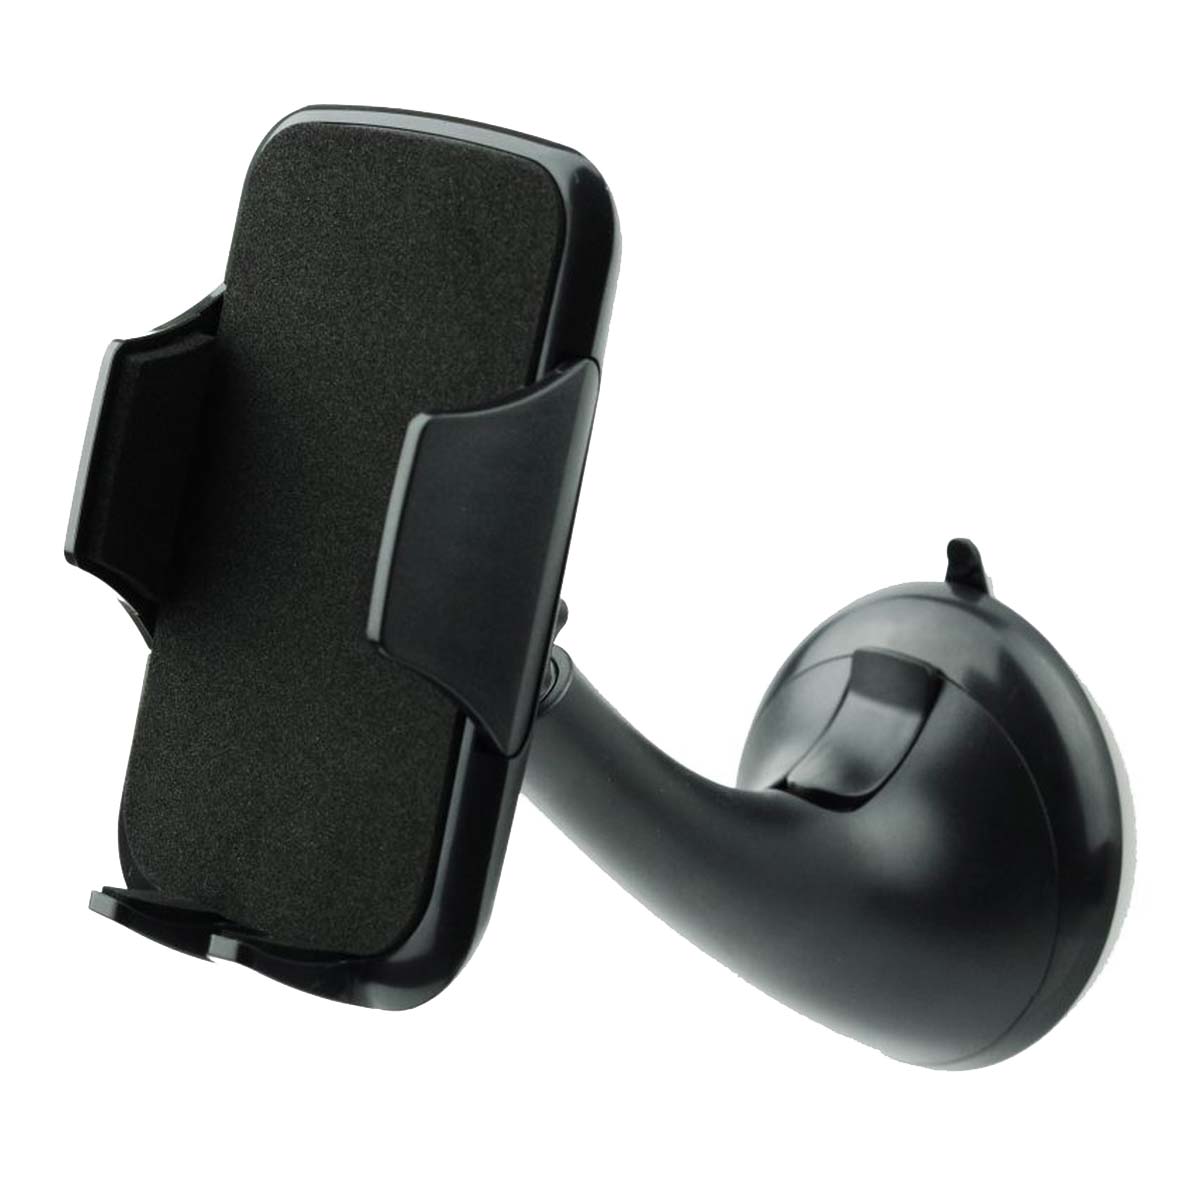 Dashboard Windshield Cradle, Phone Mount for Car Dashboard Windscreen